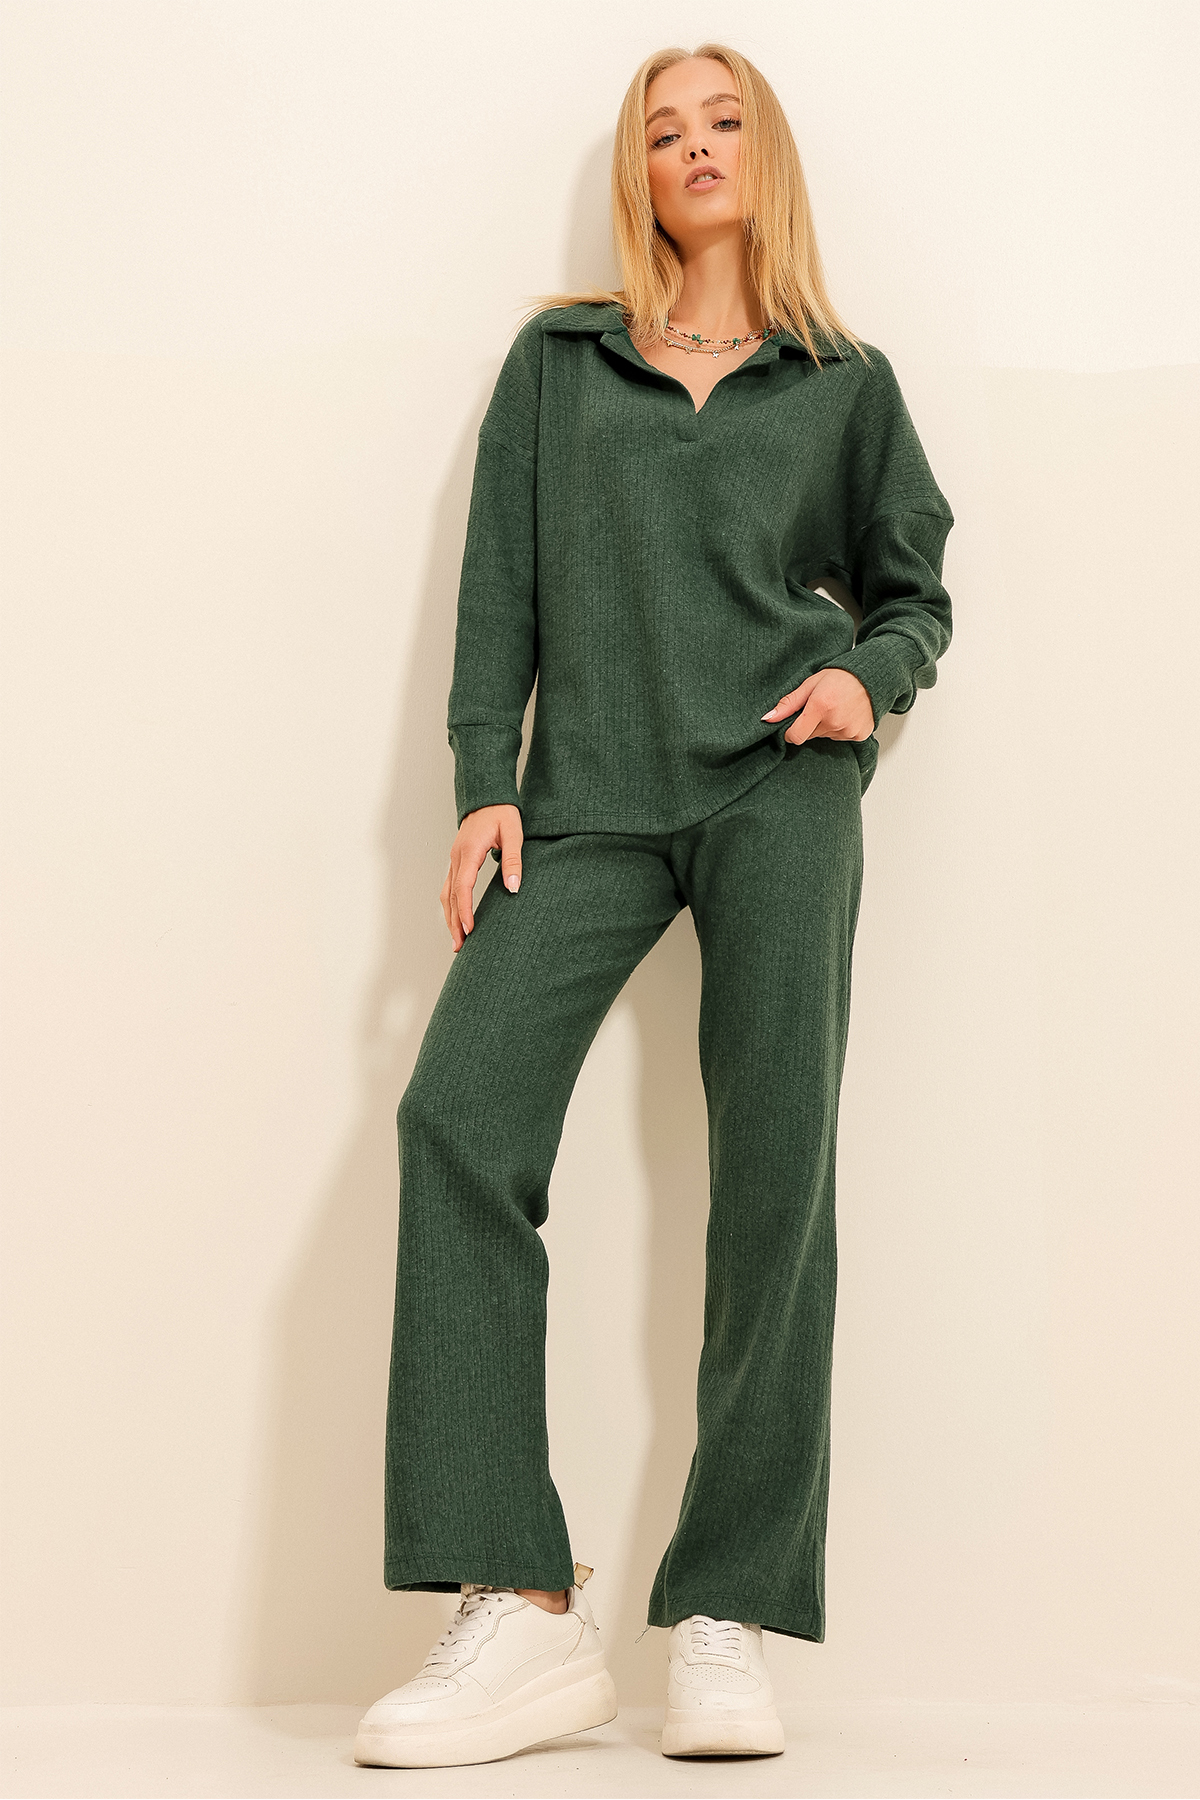 Levně Trend Alaçatı Stili Women's Walnut Green Polo Neck Top And Palazzon Trousers Knitwear Bottom Top Set